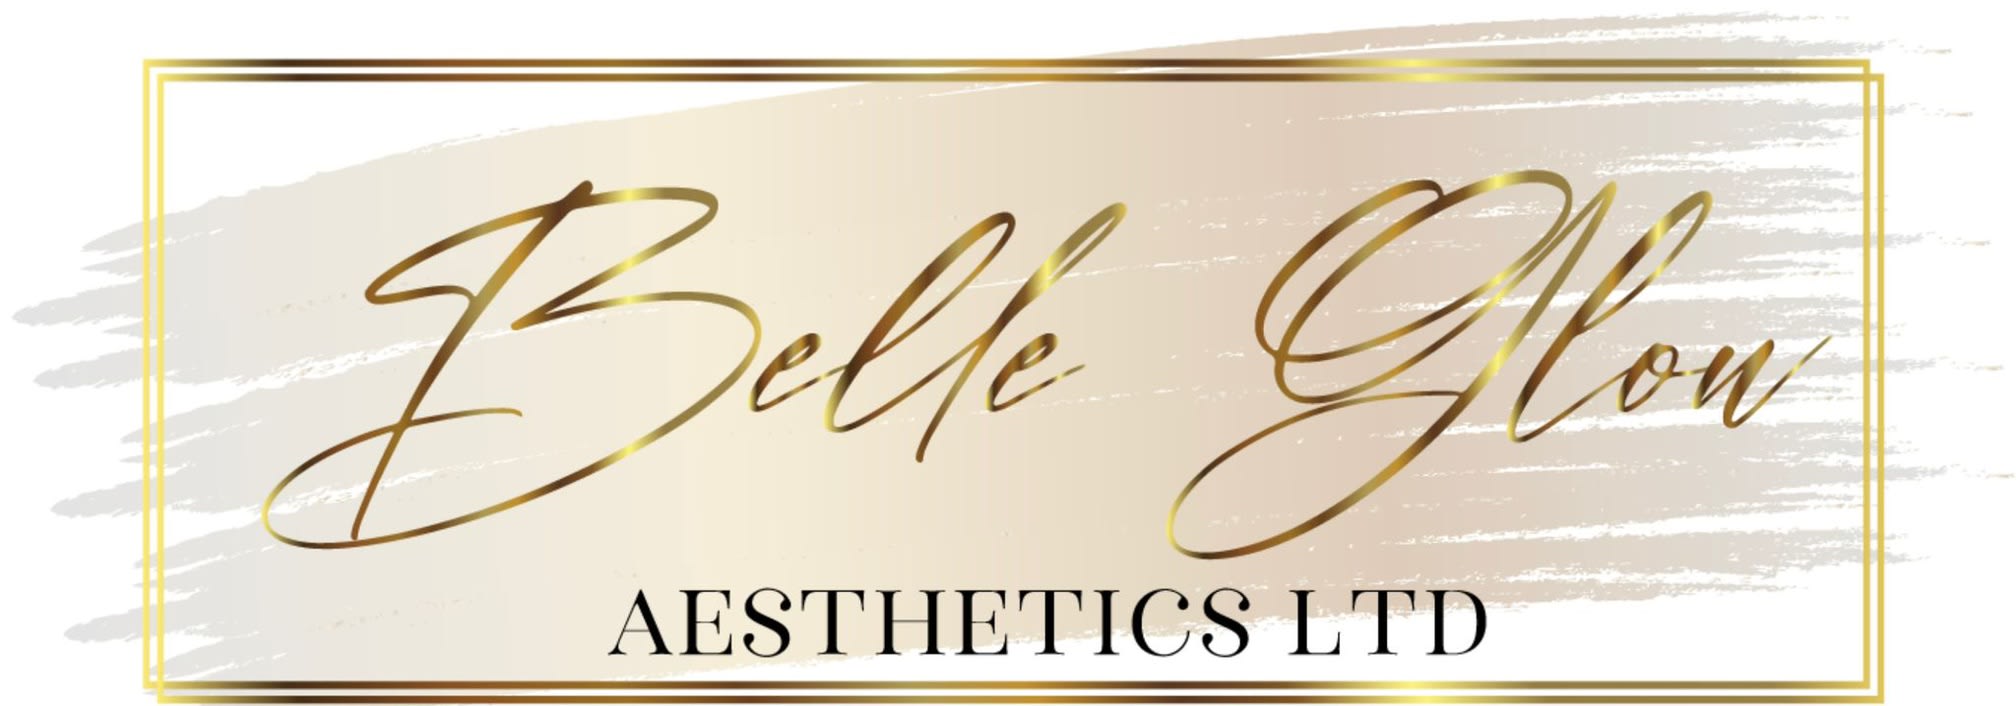 Images Belle Glow Aesthetics Ltd